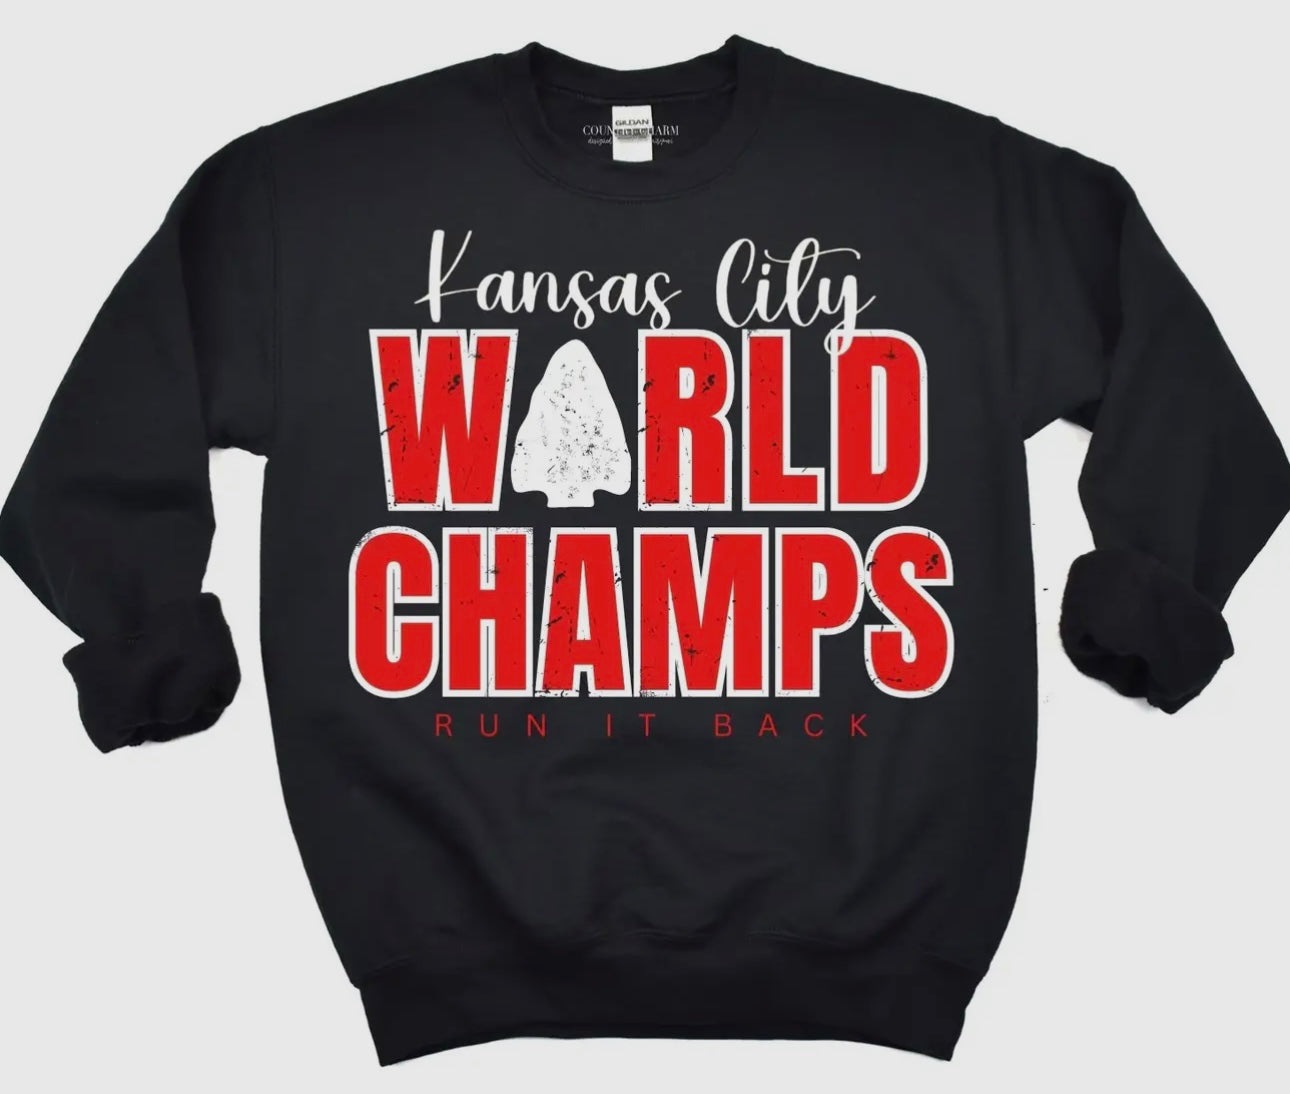 Kansas City world champs-pre order